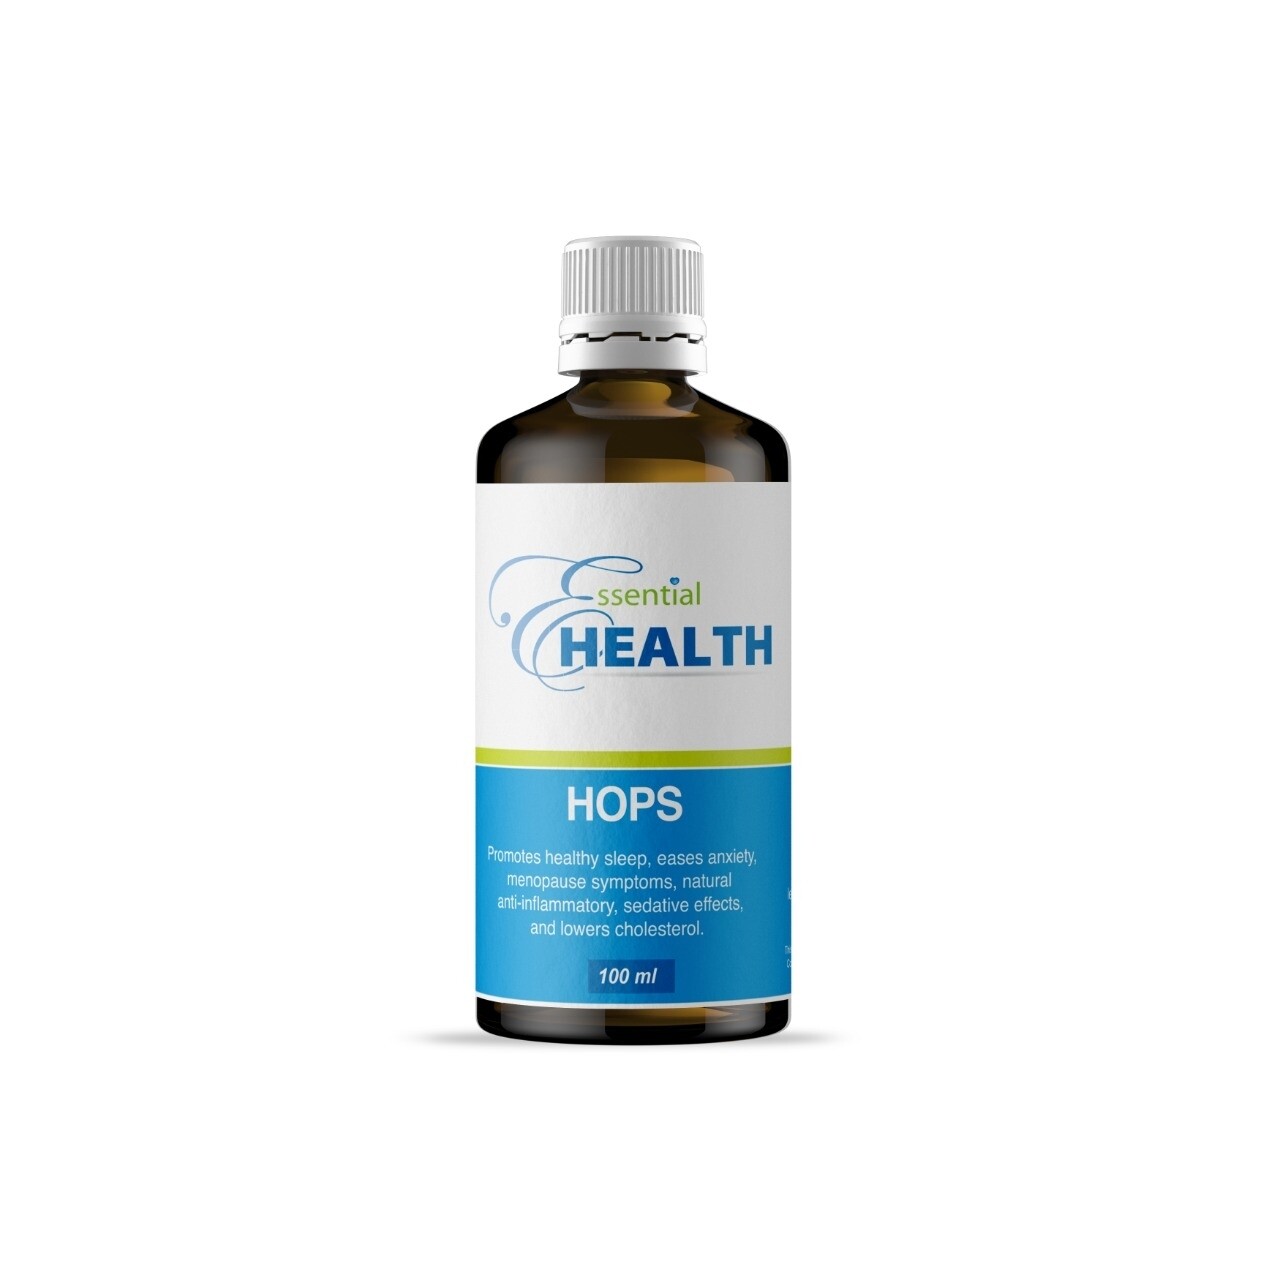 Essential Health Hops 100ml